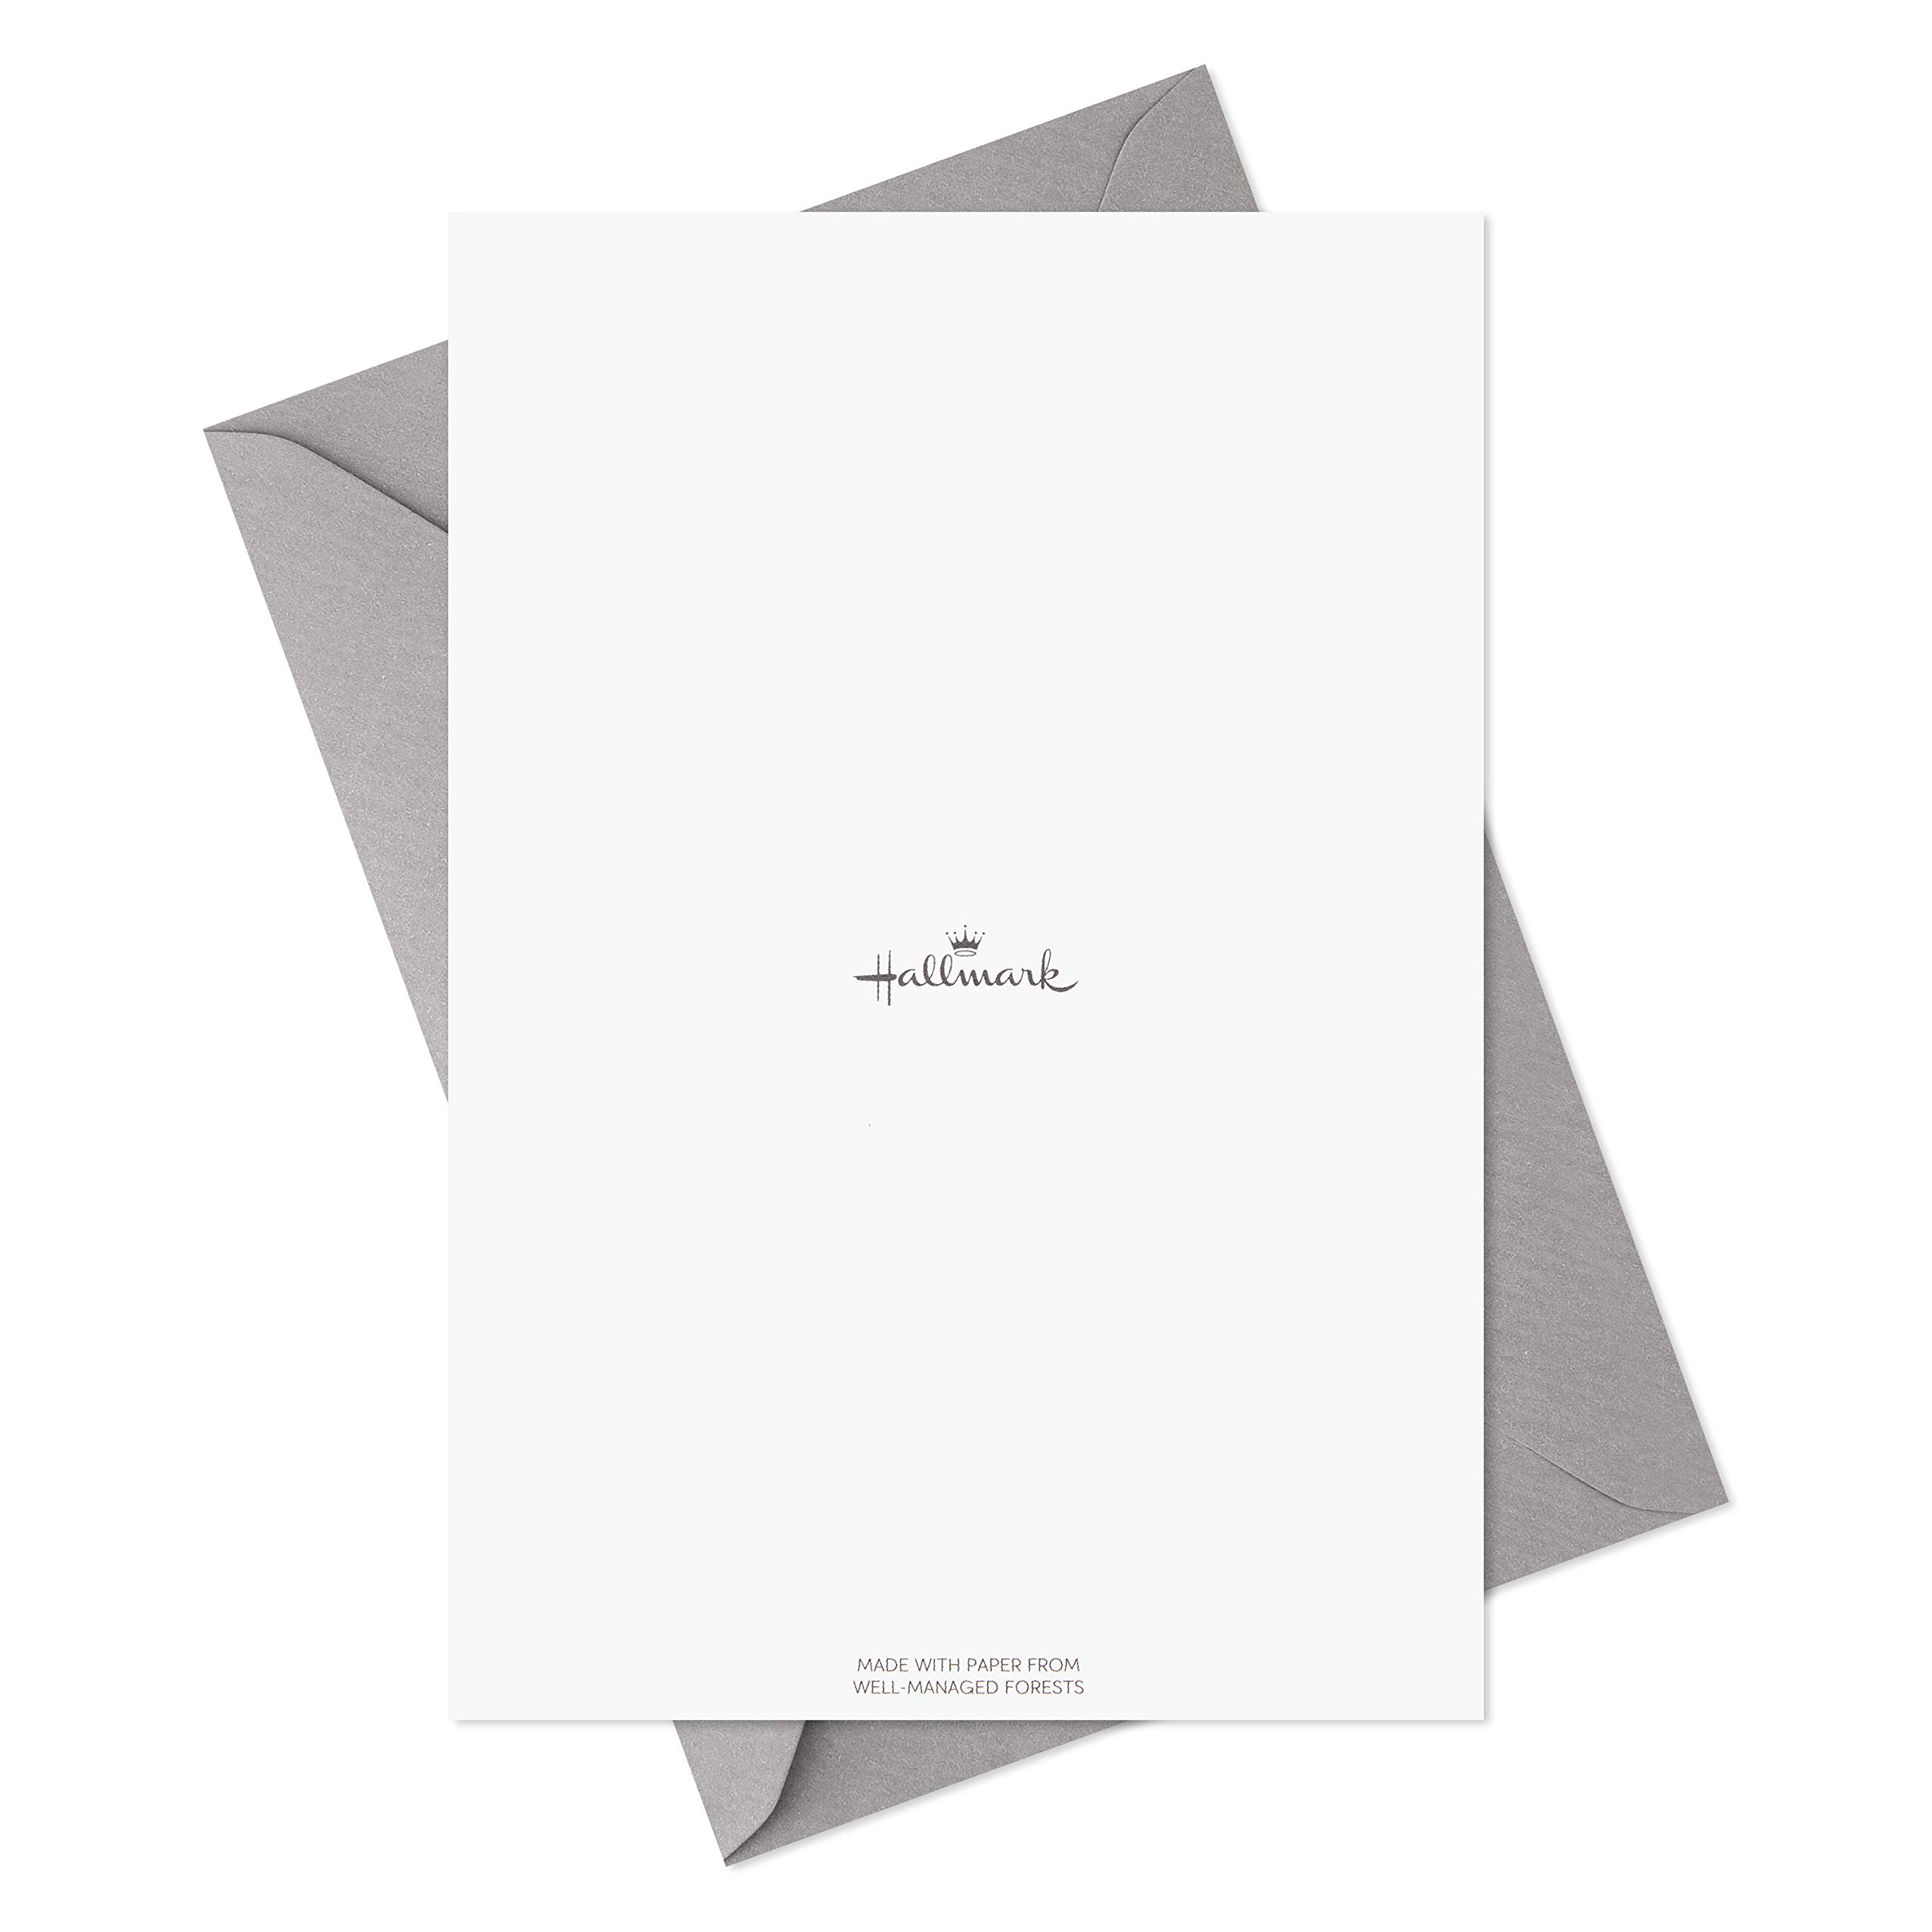 Hallmark Graduation Cards Assortment, Congratulations Grad (12 Cards and Envelopes, 4 Designs)